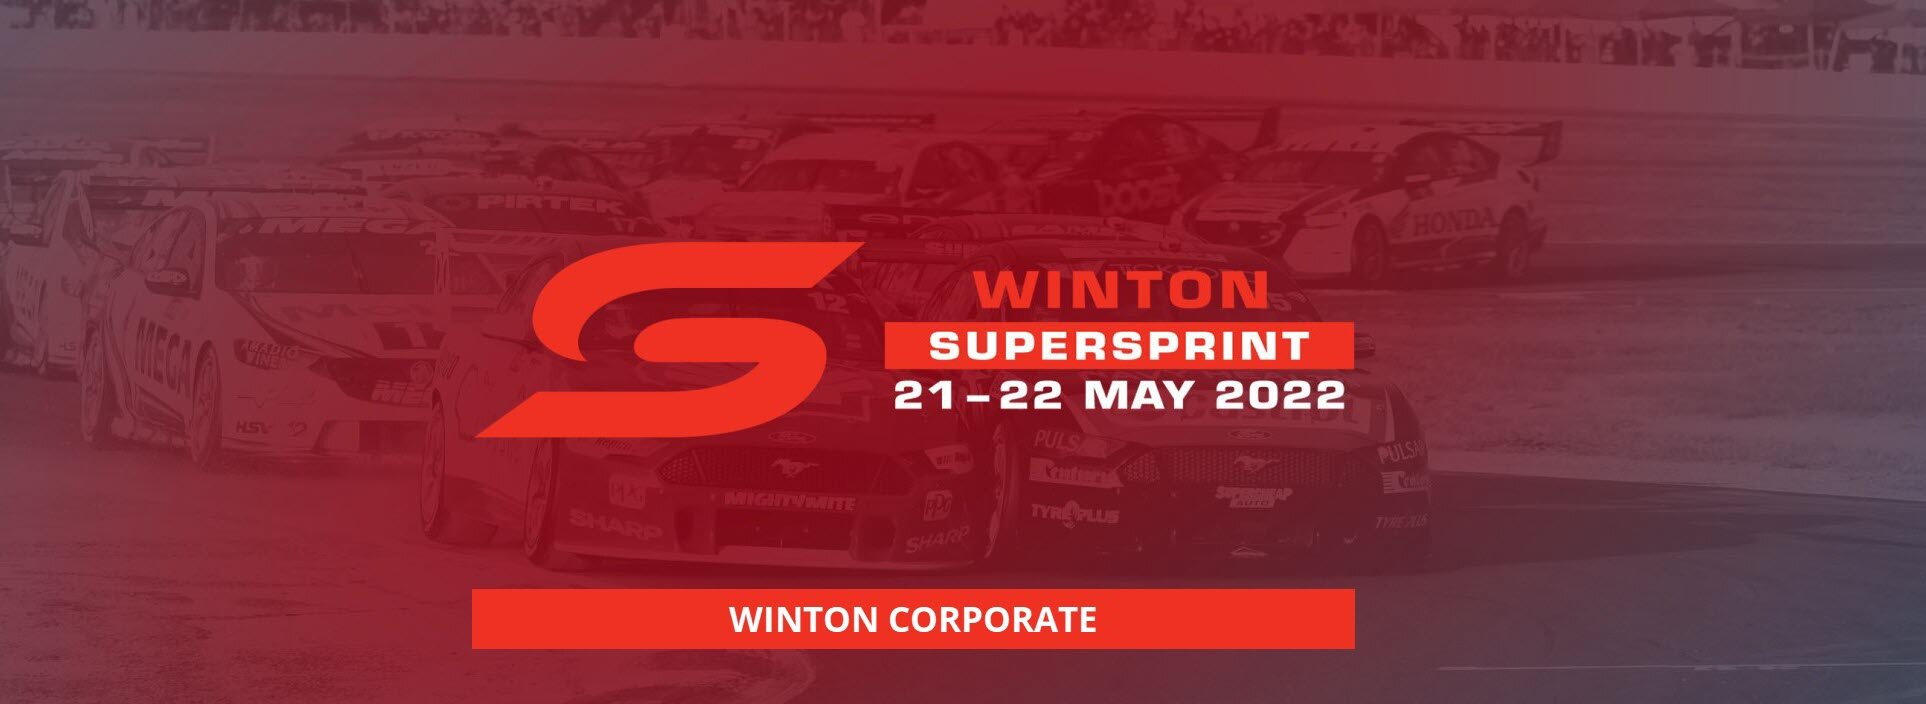 Winton SuperSprint 2022 | WINTON CORPORATE